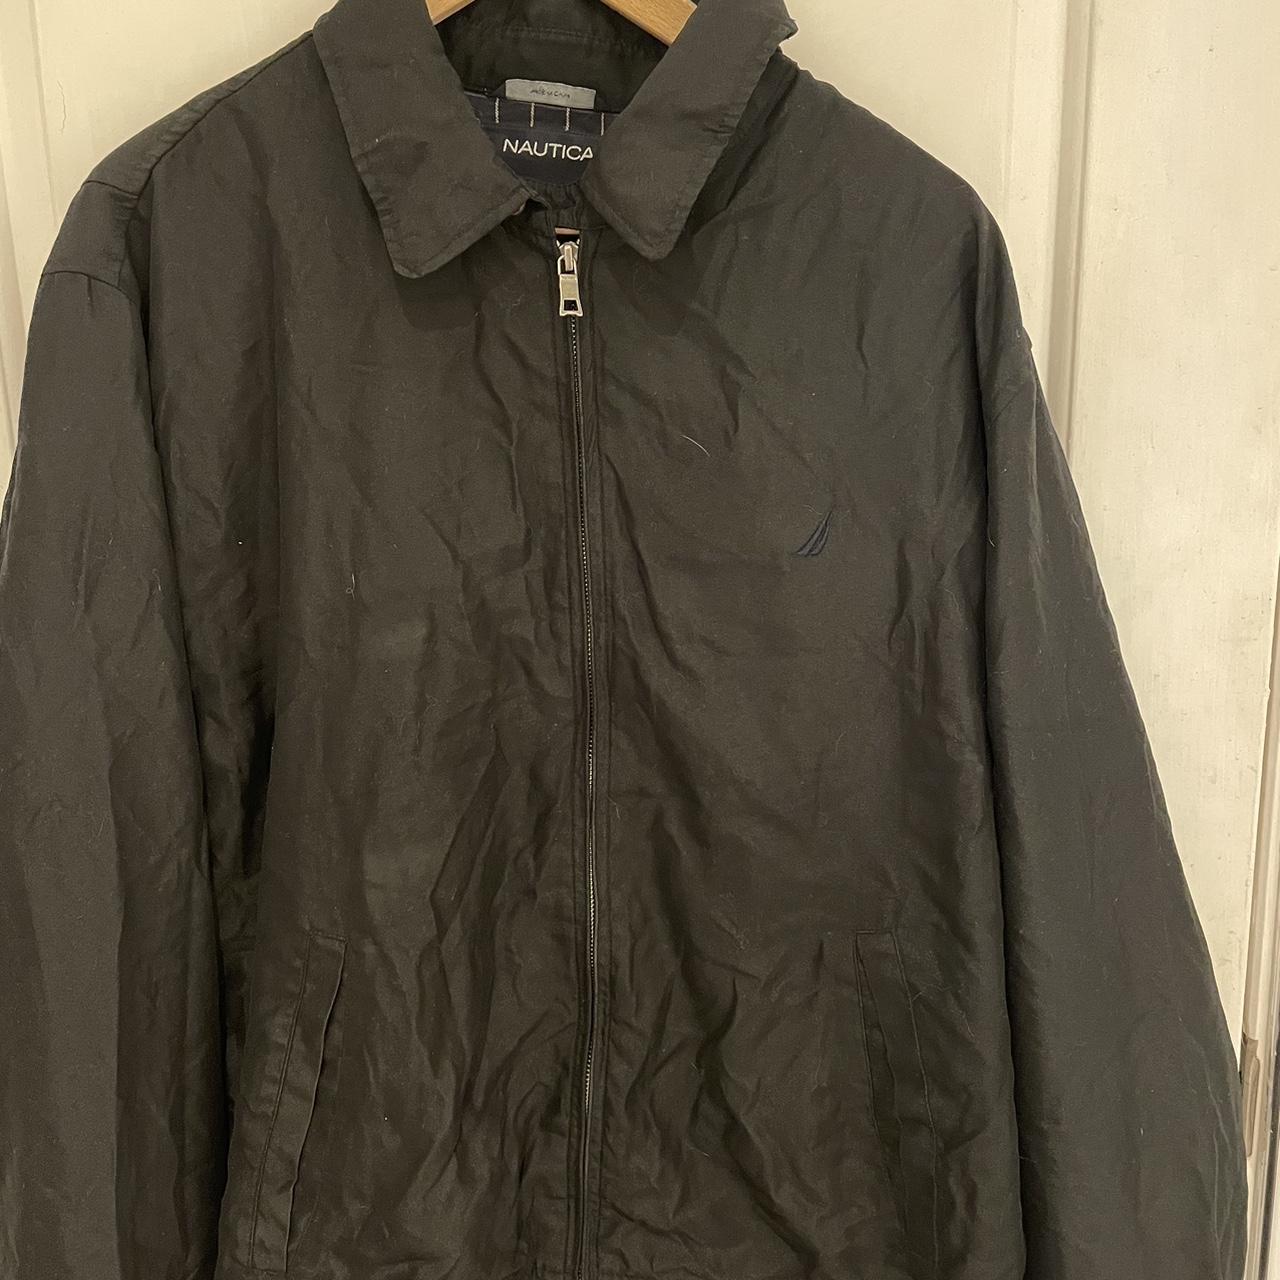 Vintage Black Nautica Jacket Size📏: Large but... - Depop